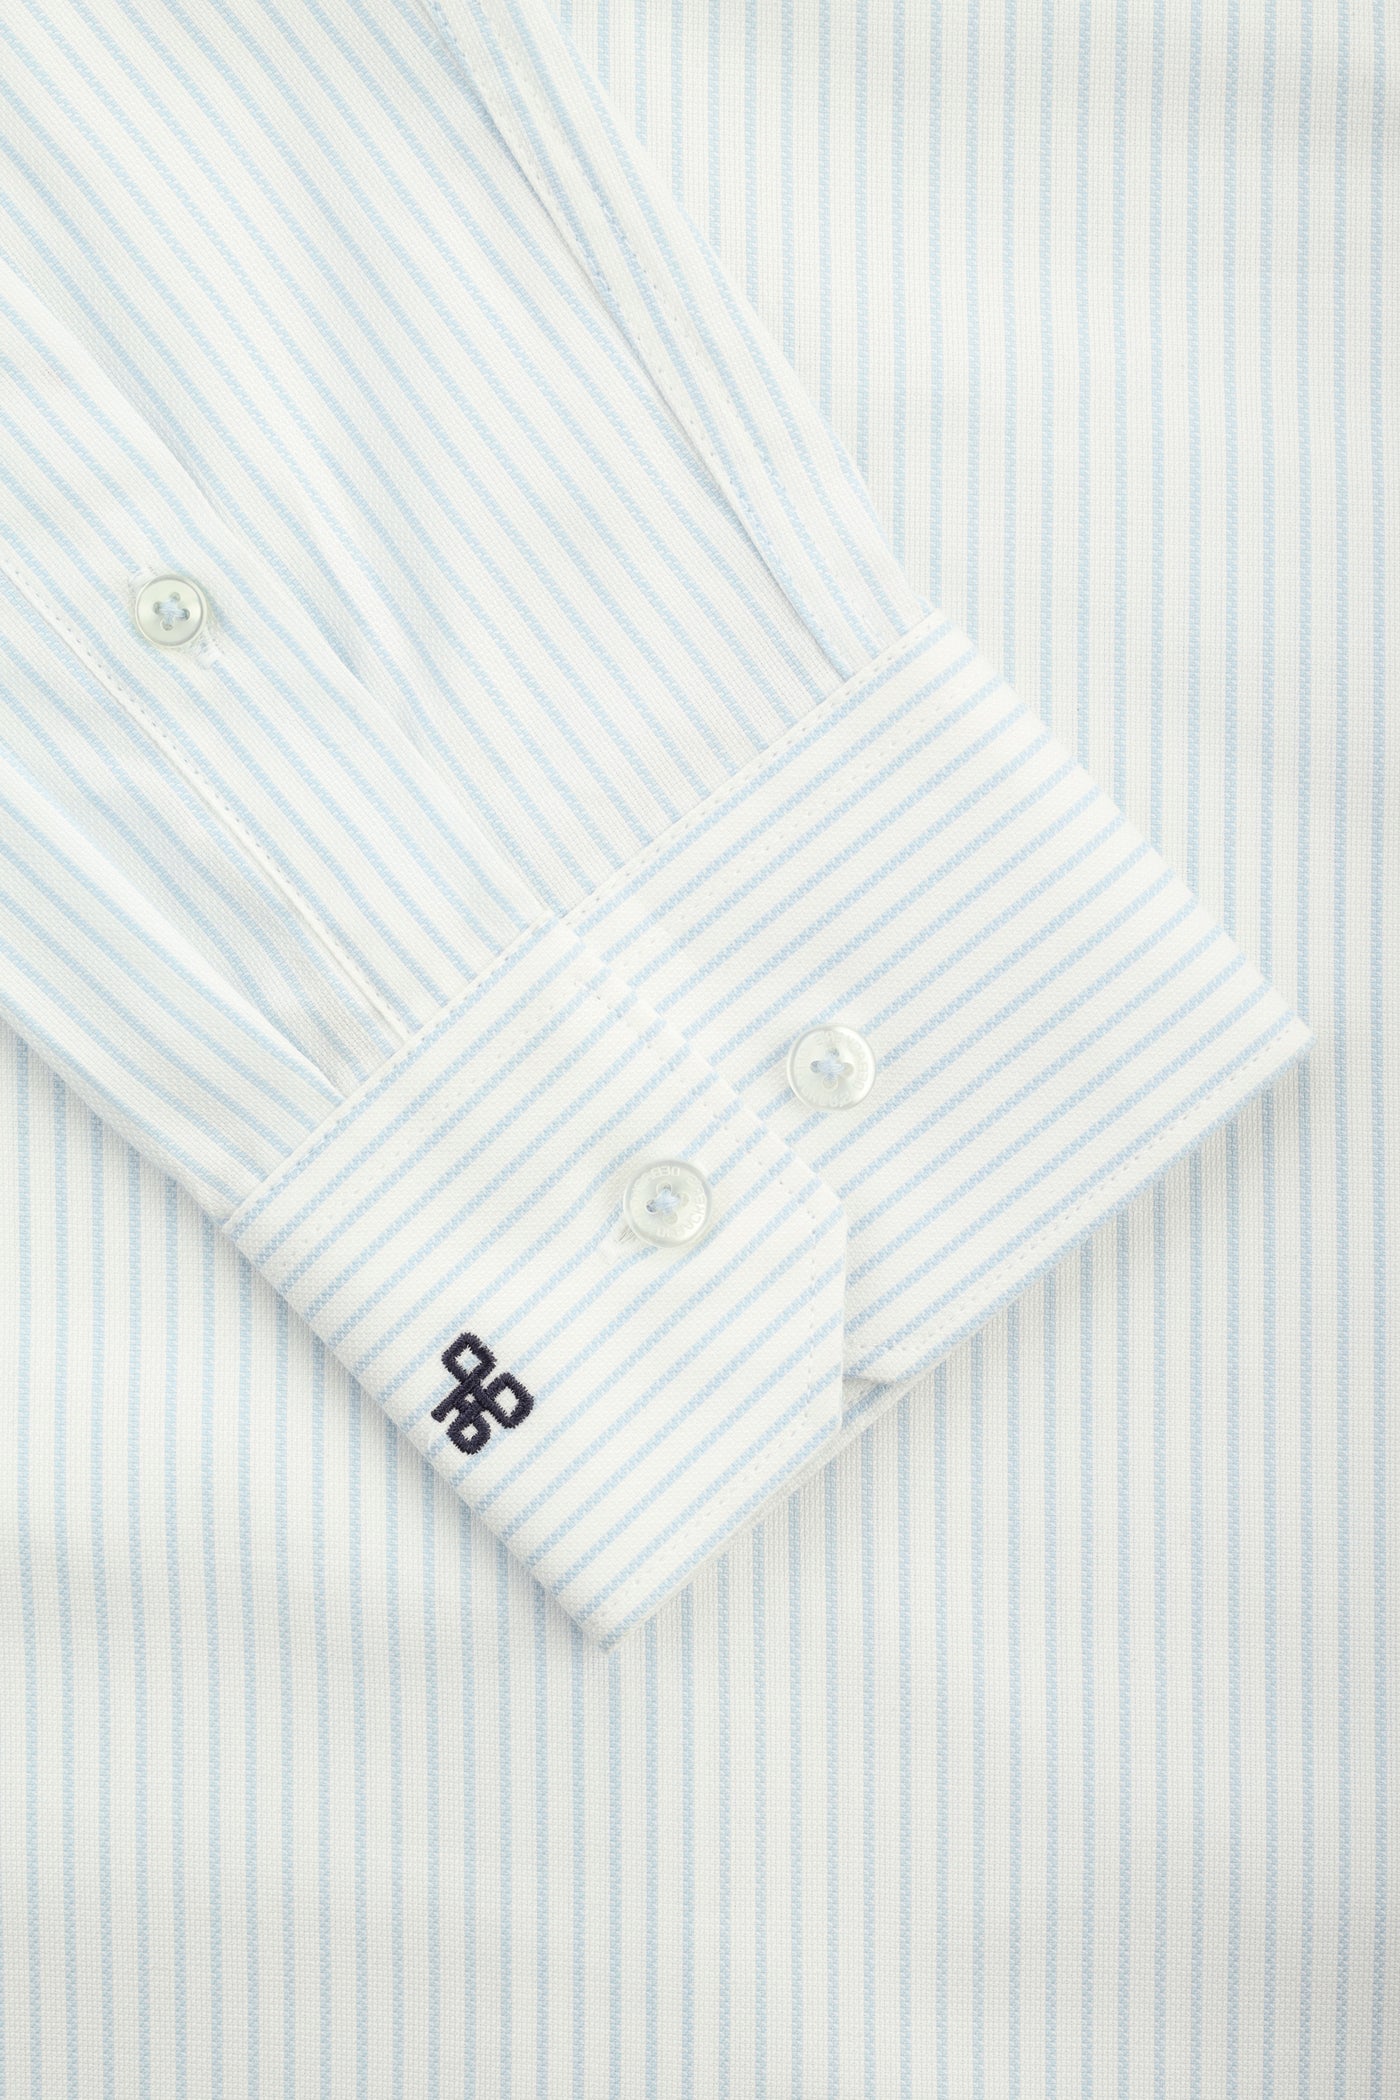 Striped White  & Light Blue Cotton Simi Classic Shirt